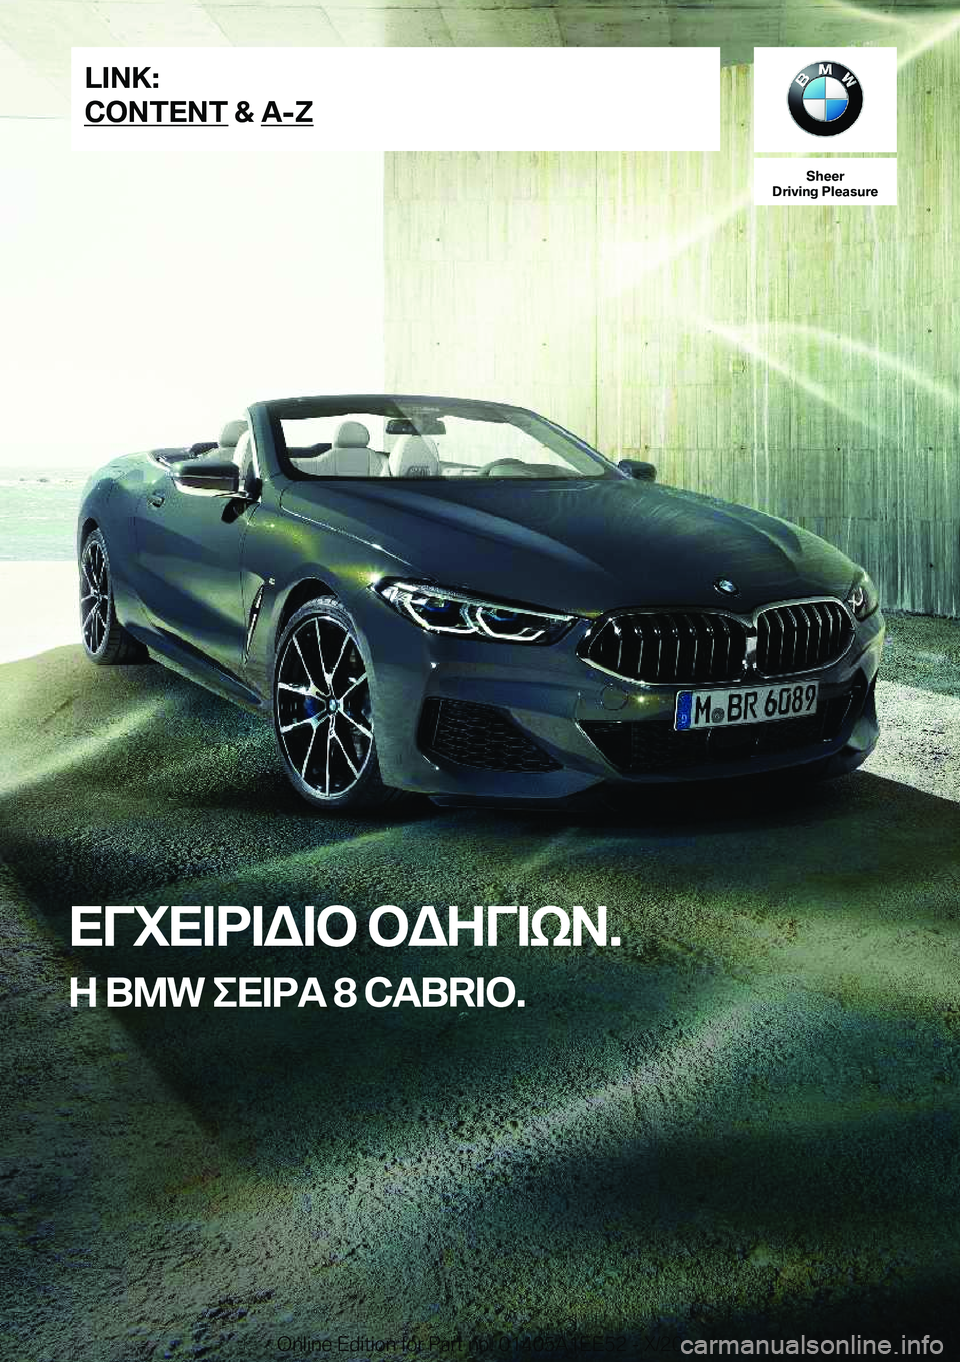 BMW 8 SERIES CONVERTIBLE 2021  ΟΔΗΓΌΣ ΧΡΉΣΗΣ (in Greek) �S�h�e�e�r
�D�r�i�v�i�n�g��P�l�e�a�s�u�r�e
XViX=d=W=b�bWZV=kA�.
�H��B�M�W�eX=dT��8��C�A�B�R�I�O�.�L�I�N�K�:
�C�O�N�T�E�N�T��&��A�-�Z�O�n�l�i�n�e��E�d�i�t�i�o�n��f�o�r�